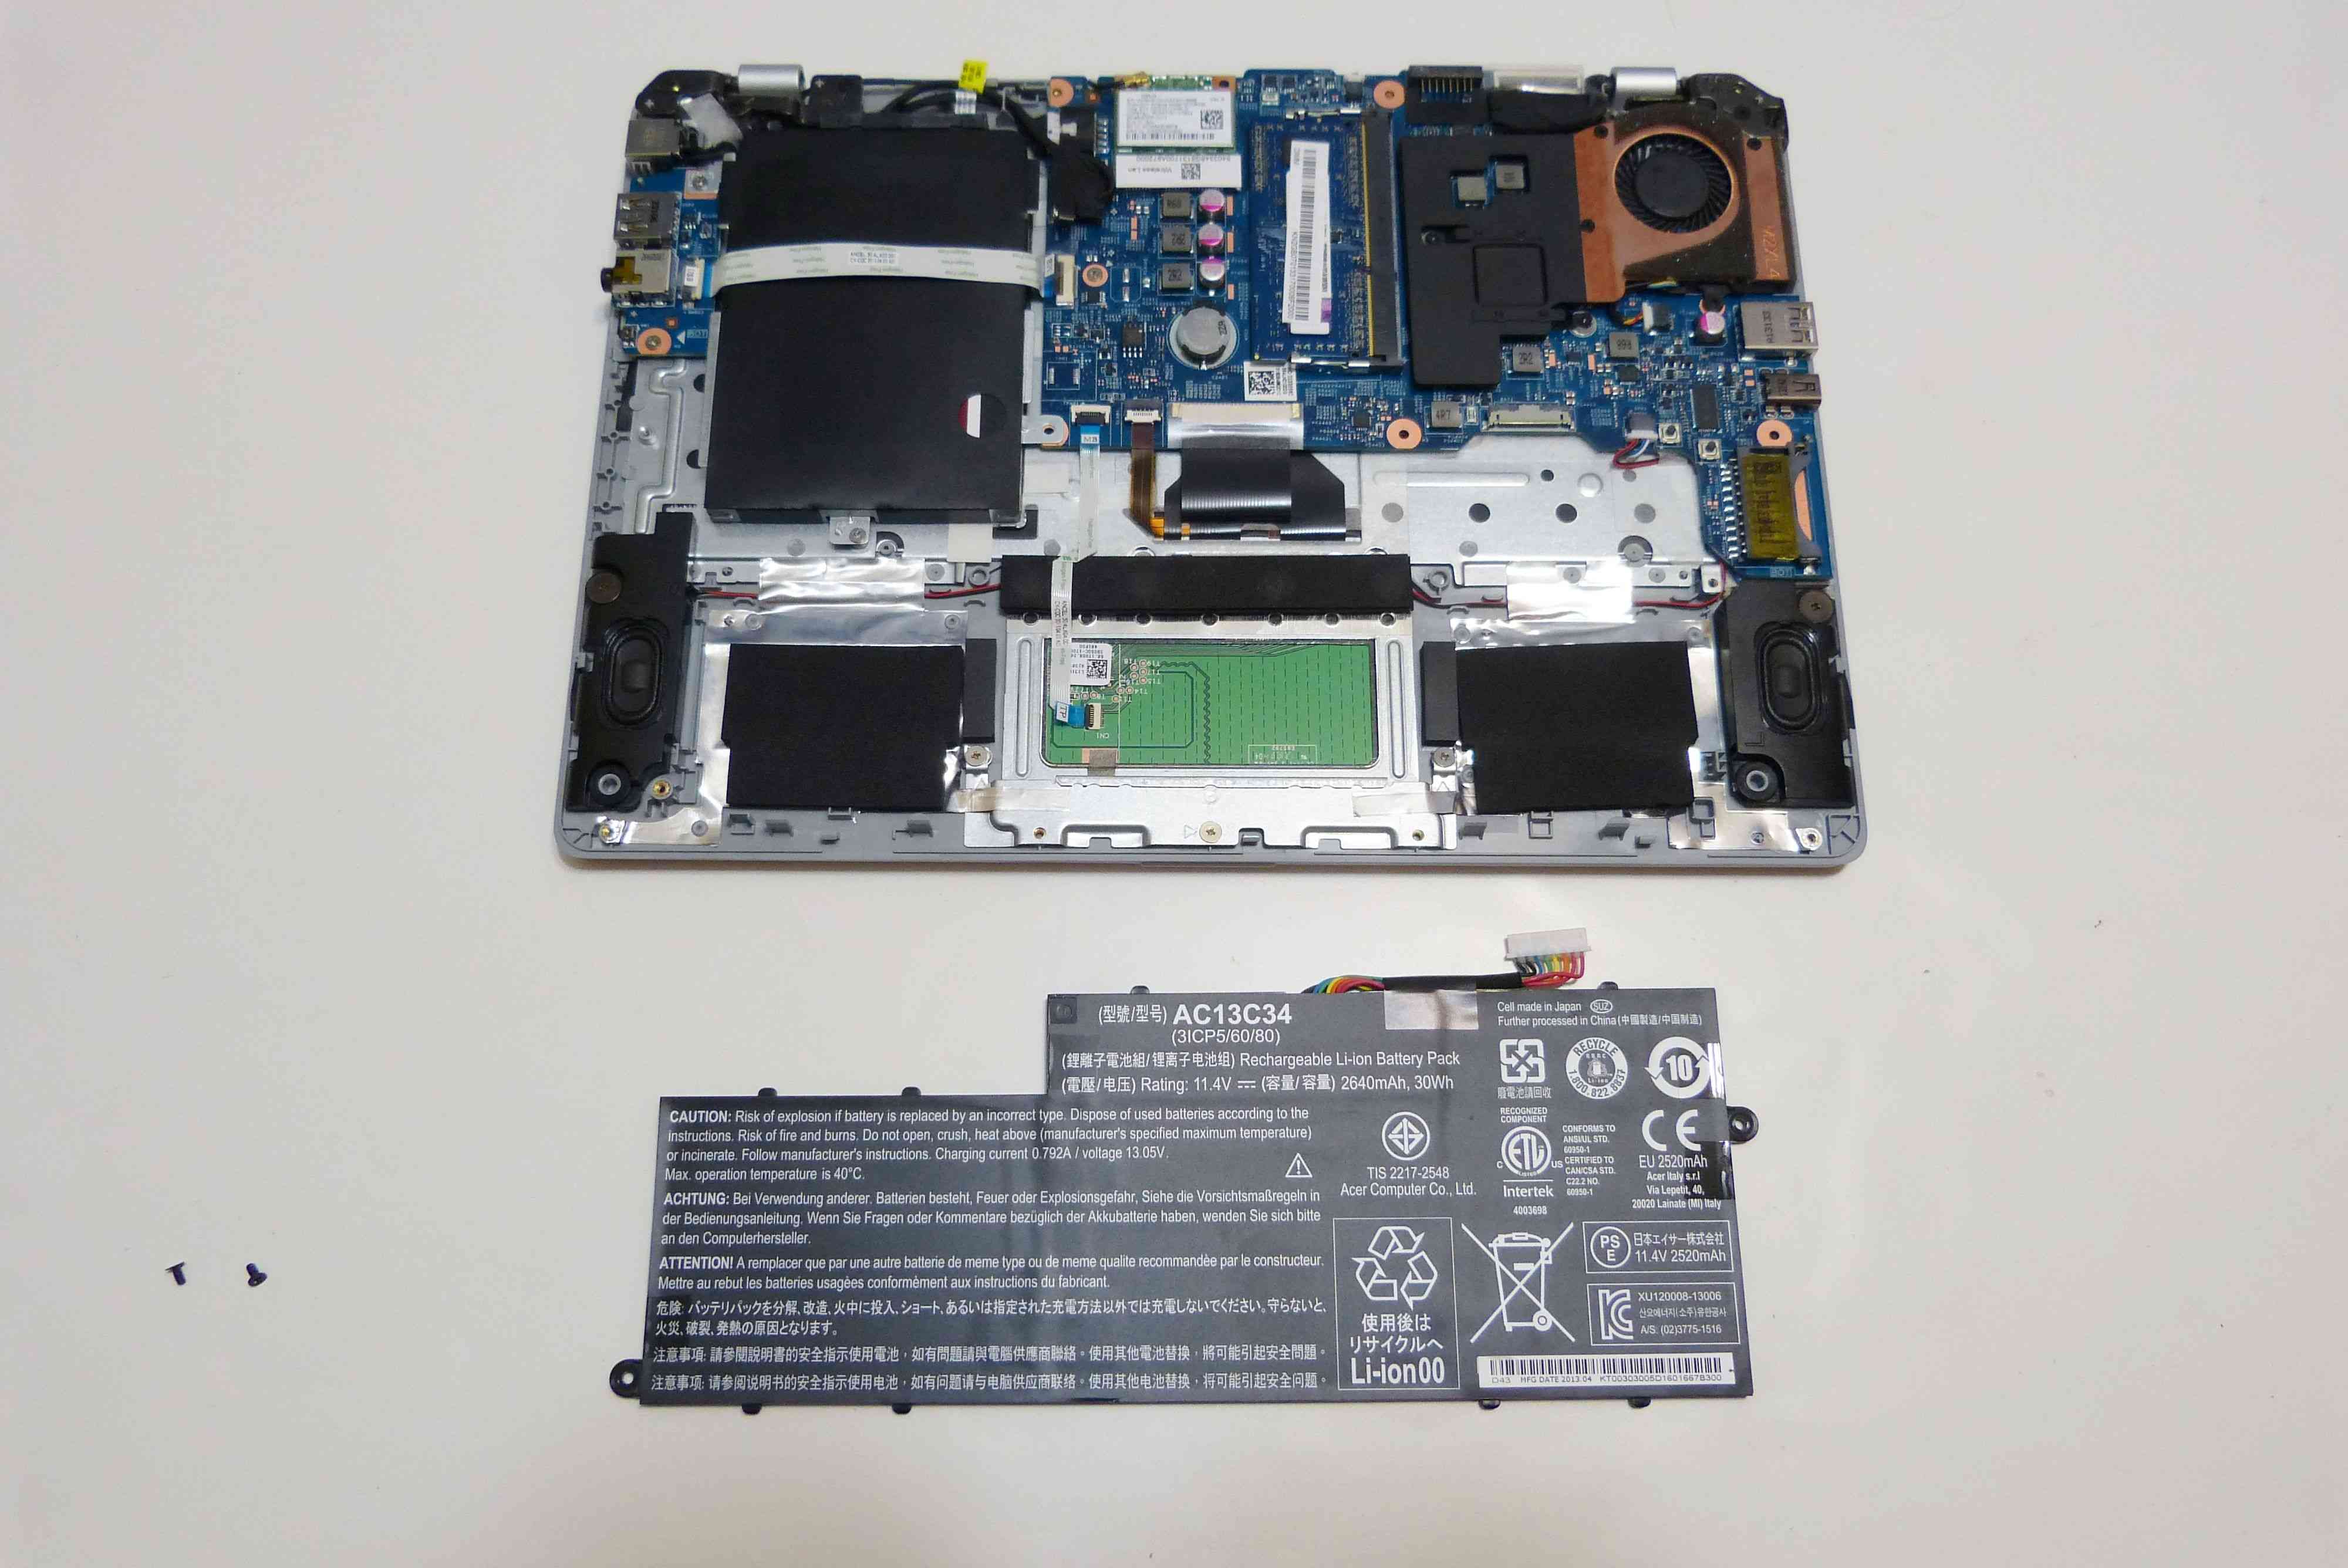 Temash A6-1450 Performance (Acer Aspire V5) Update: Naked Pics